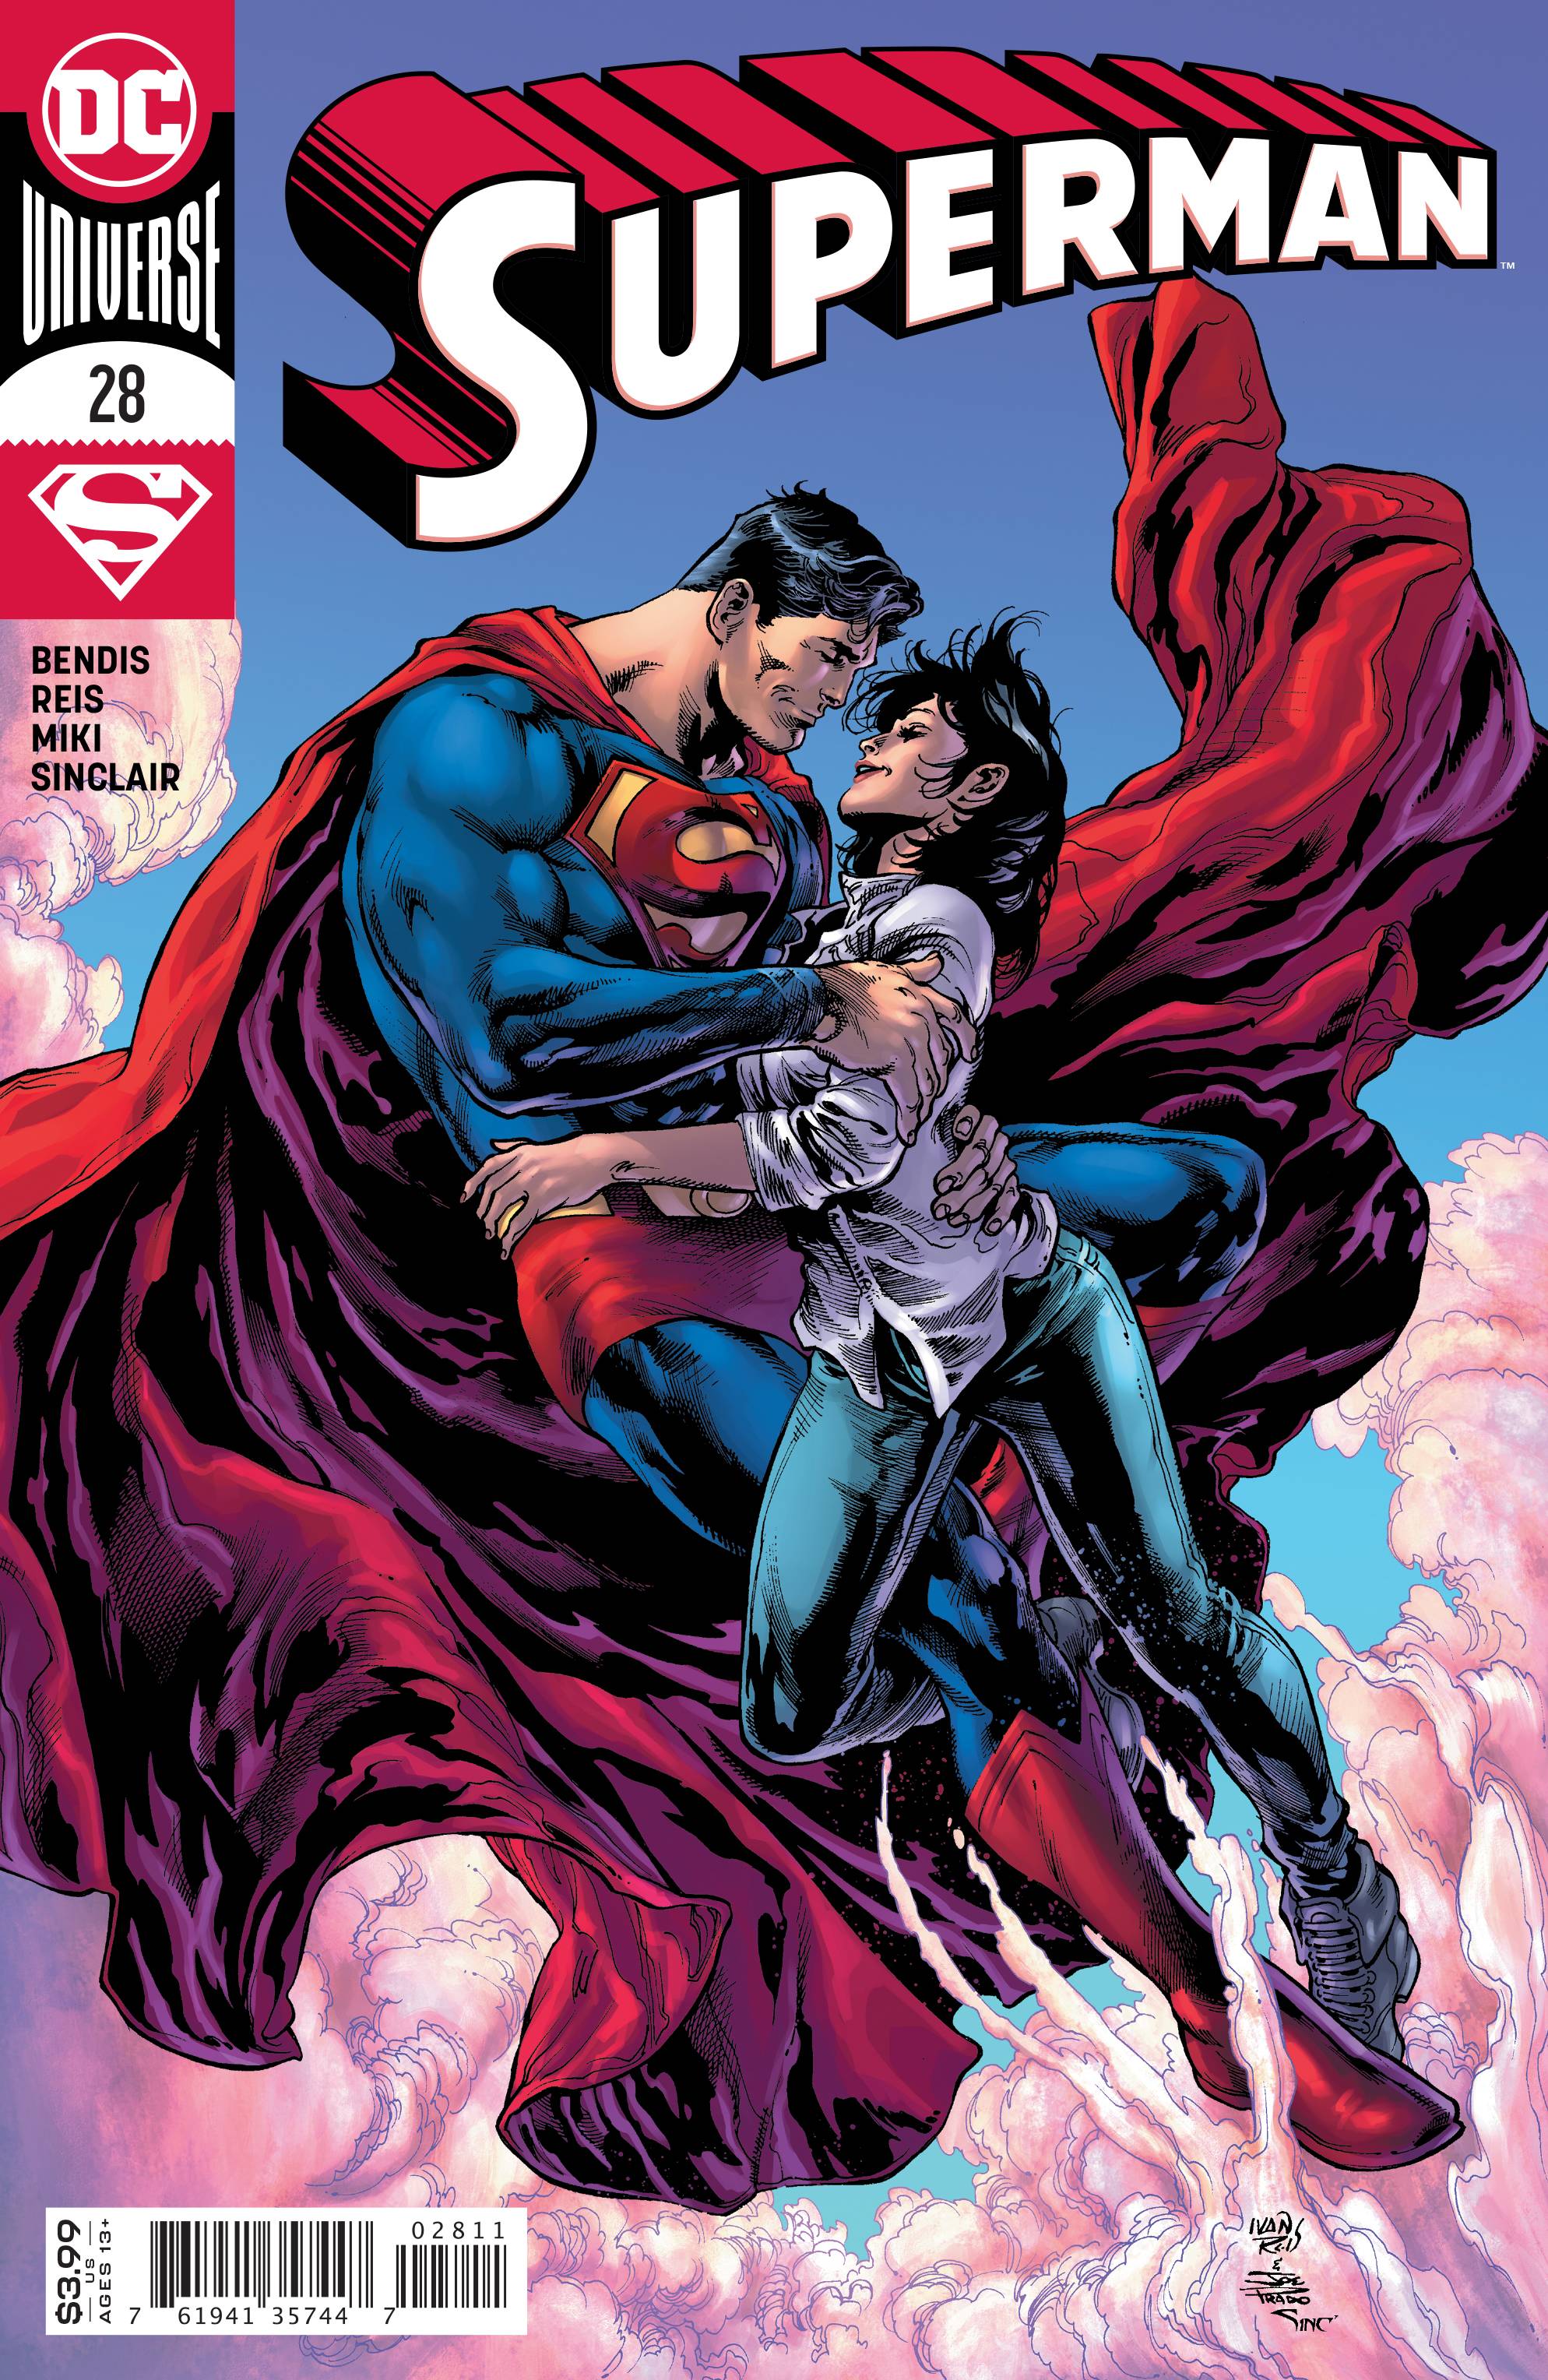 SUPERMAN #28 | Game Master's Emporium (The New GME)